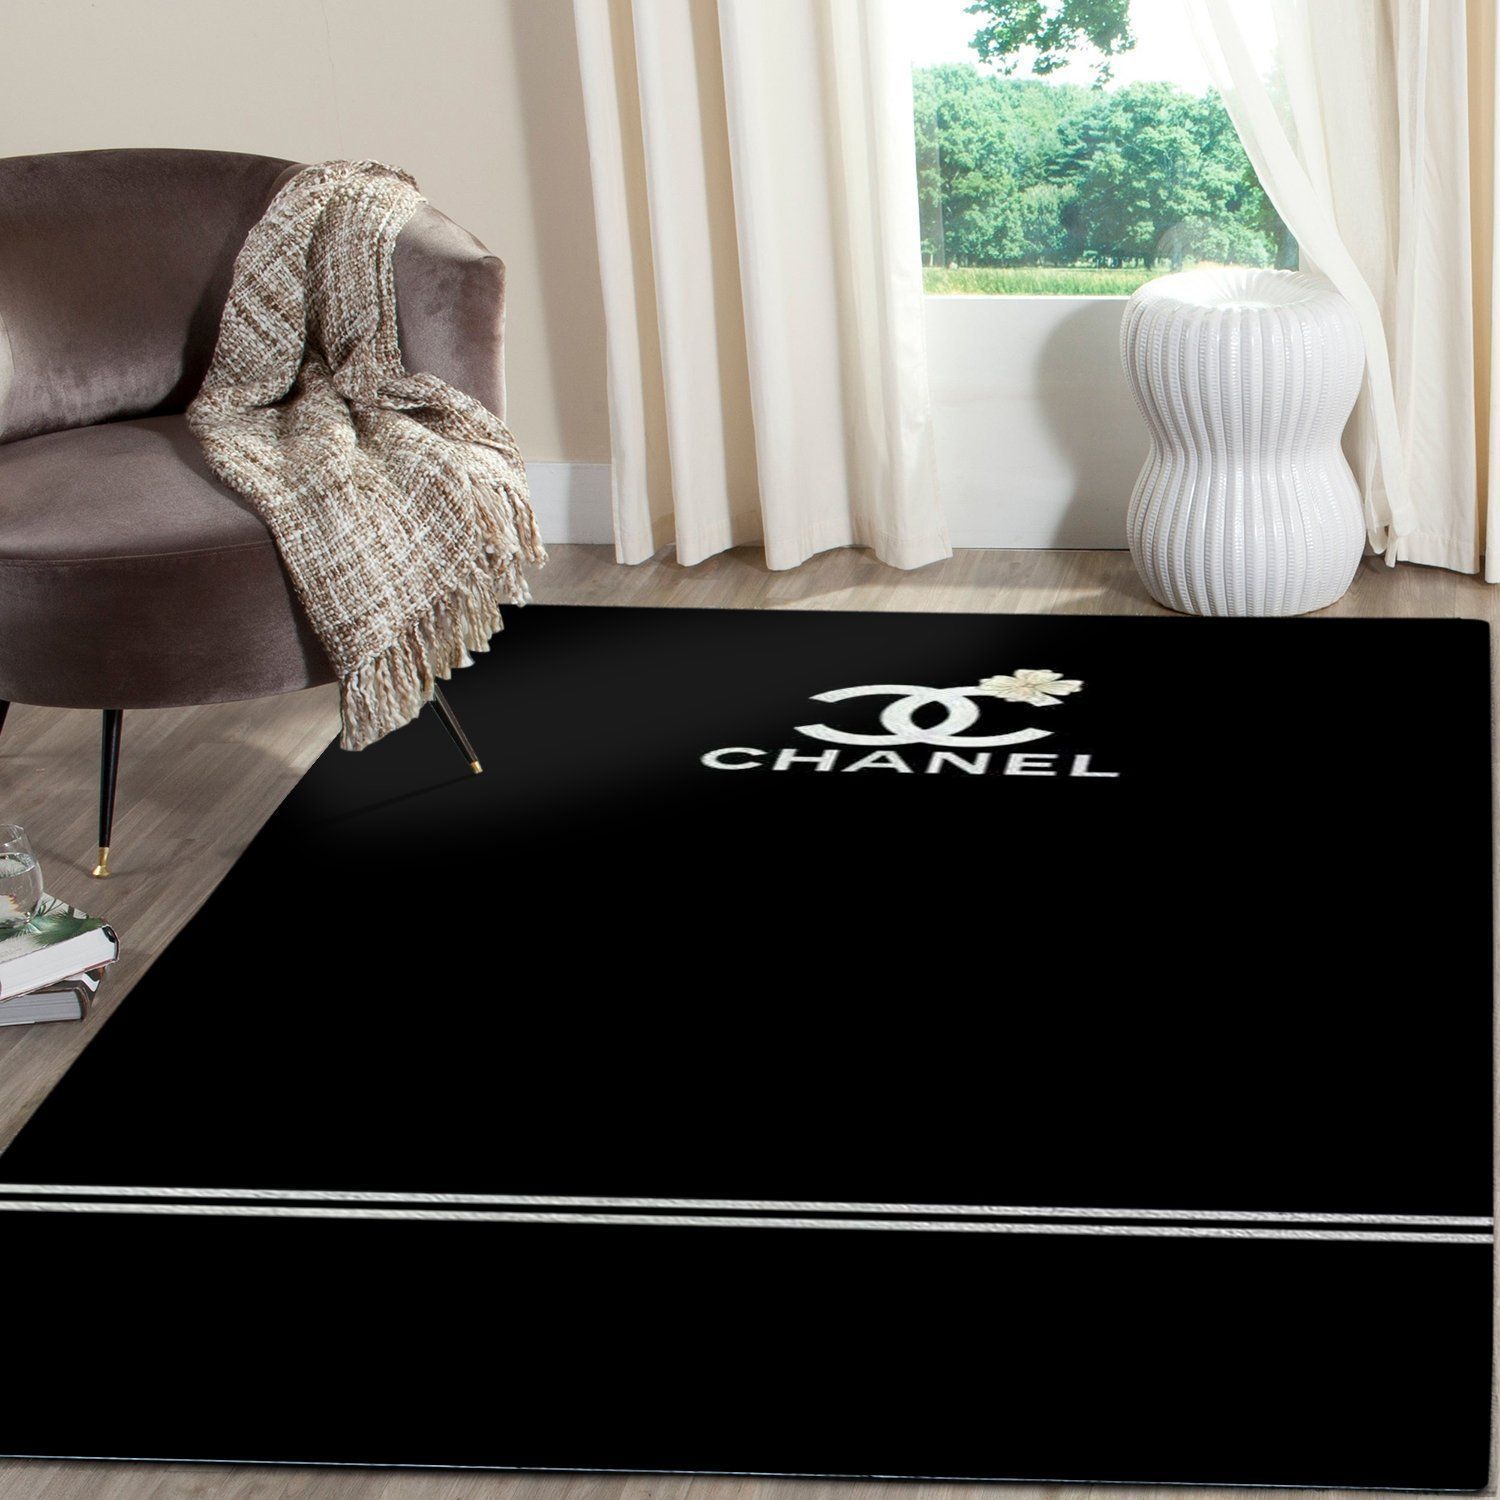 Chanel Black Line Rectangle Rug Area Carpet Luxury Home Decor Fashion Brand Door Mat